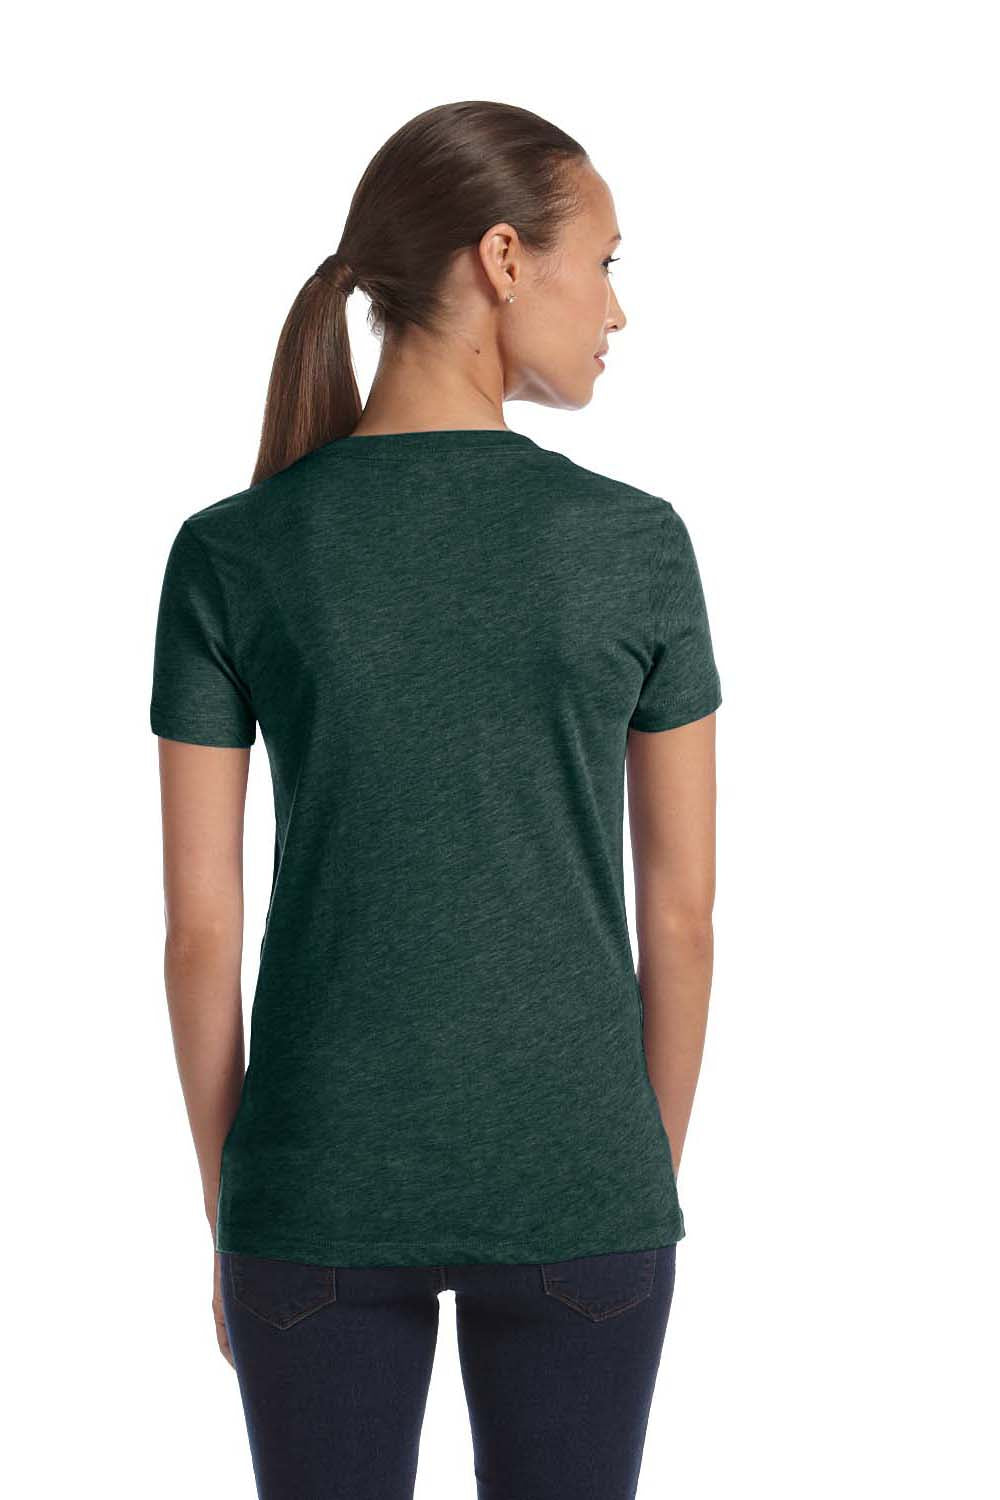 Bella + Canvas 8435 Womens Short Sleeve Deep V-Neck T-Shirt Emerald Green Back